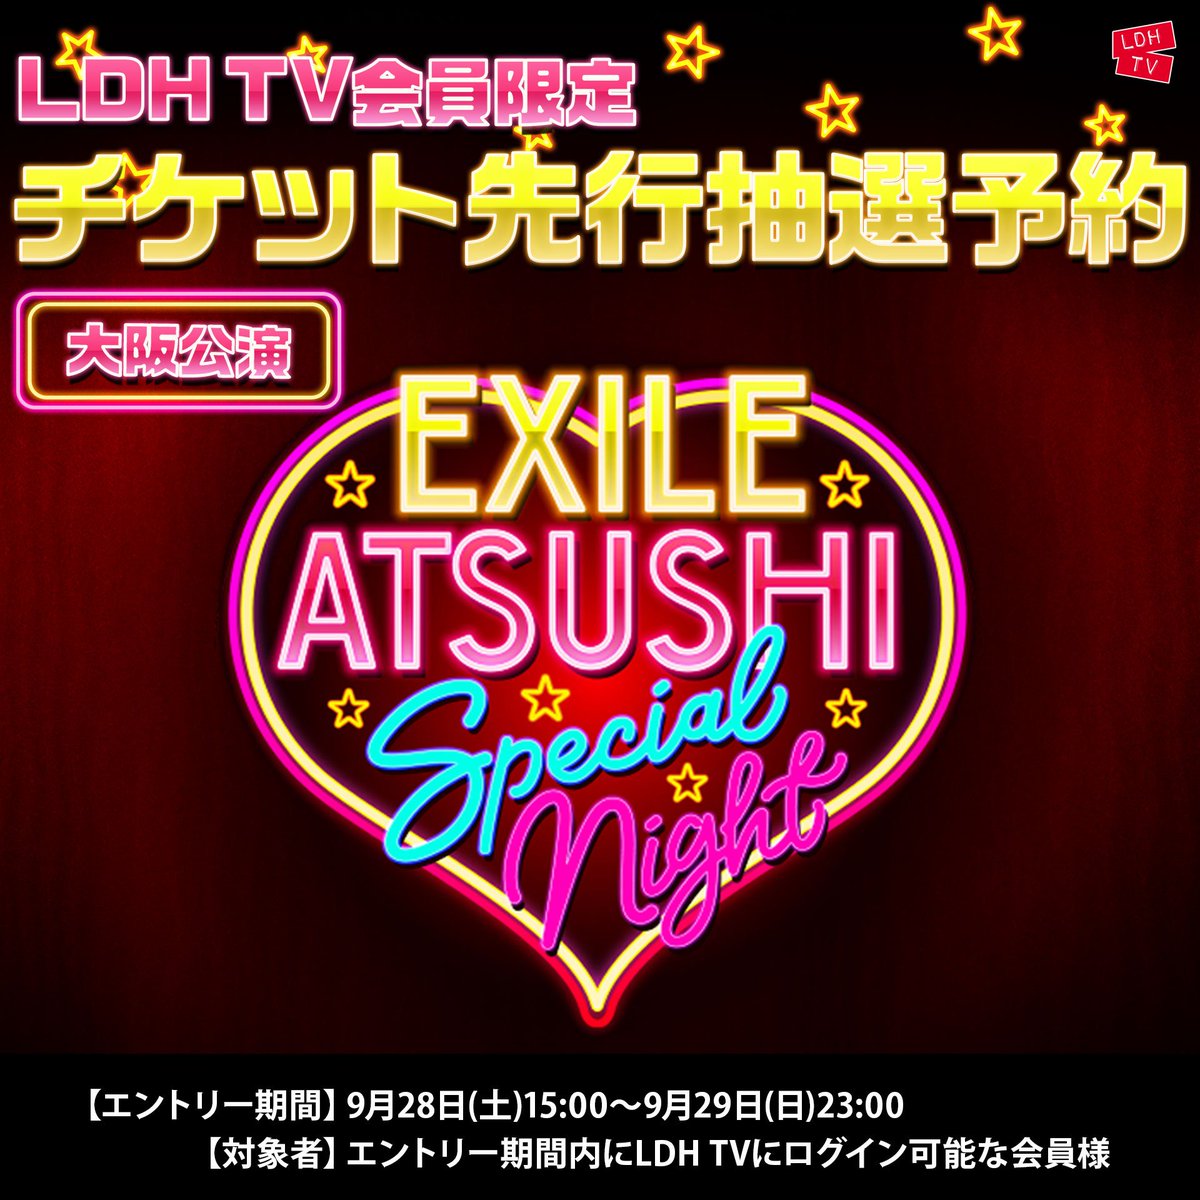 Cl 公式 Ldh Tv会員限定 Exile Atsushi Special Night 大阪公演 Ldh Tvチケット先行抽選予約は9月28日 土 15 00から この機会をお見逃しなく エントリー期間 9月28日 土 15 00 9月29日 日 23 00 対象者 エントリー期間内にldh